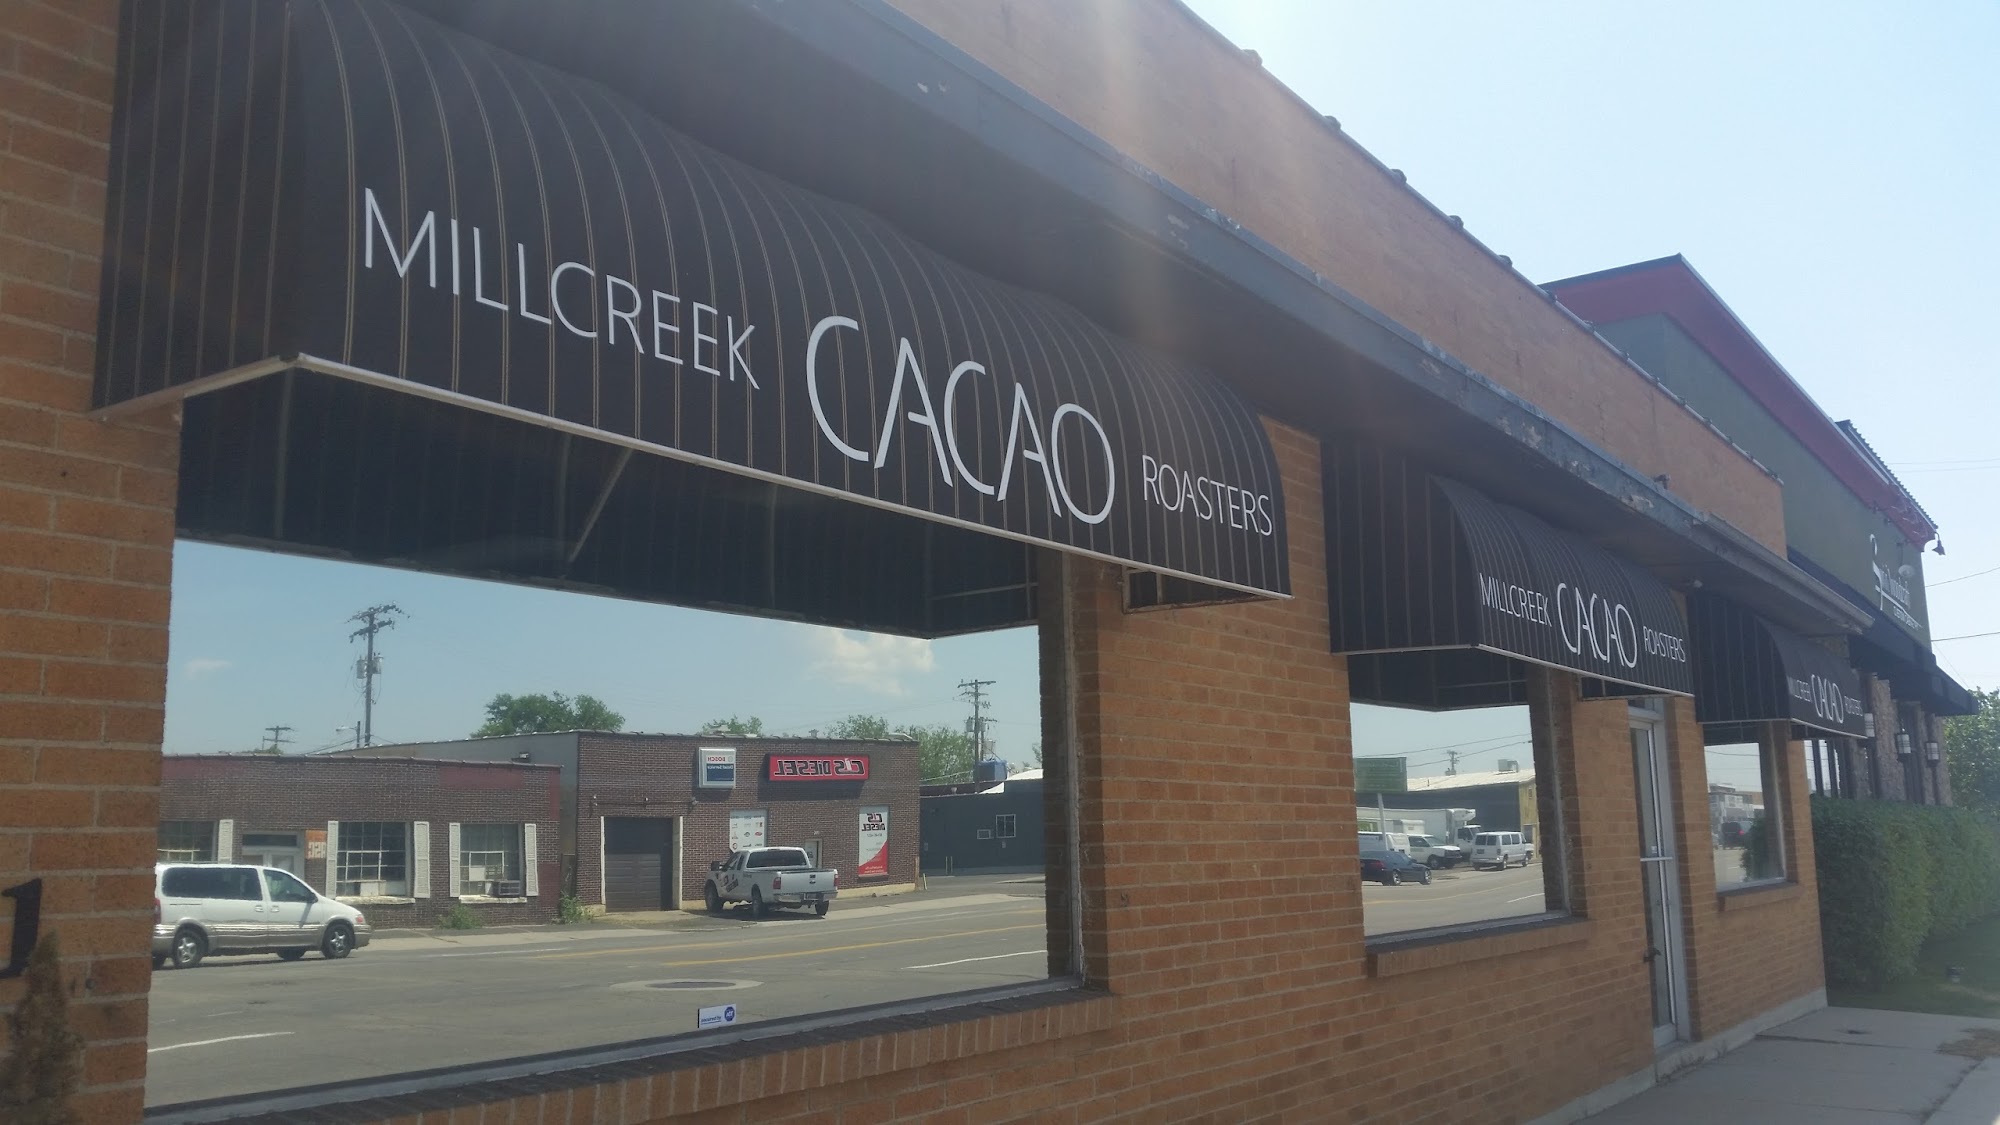 Millcreek Cacao Roasters